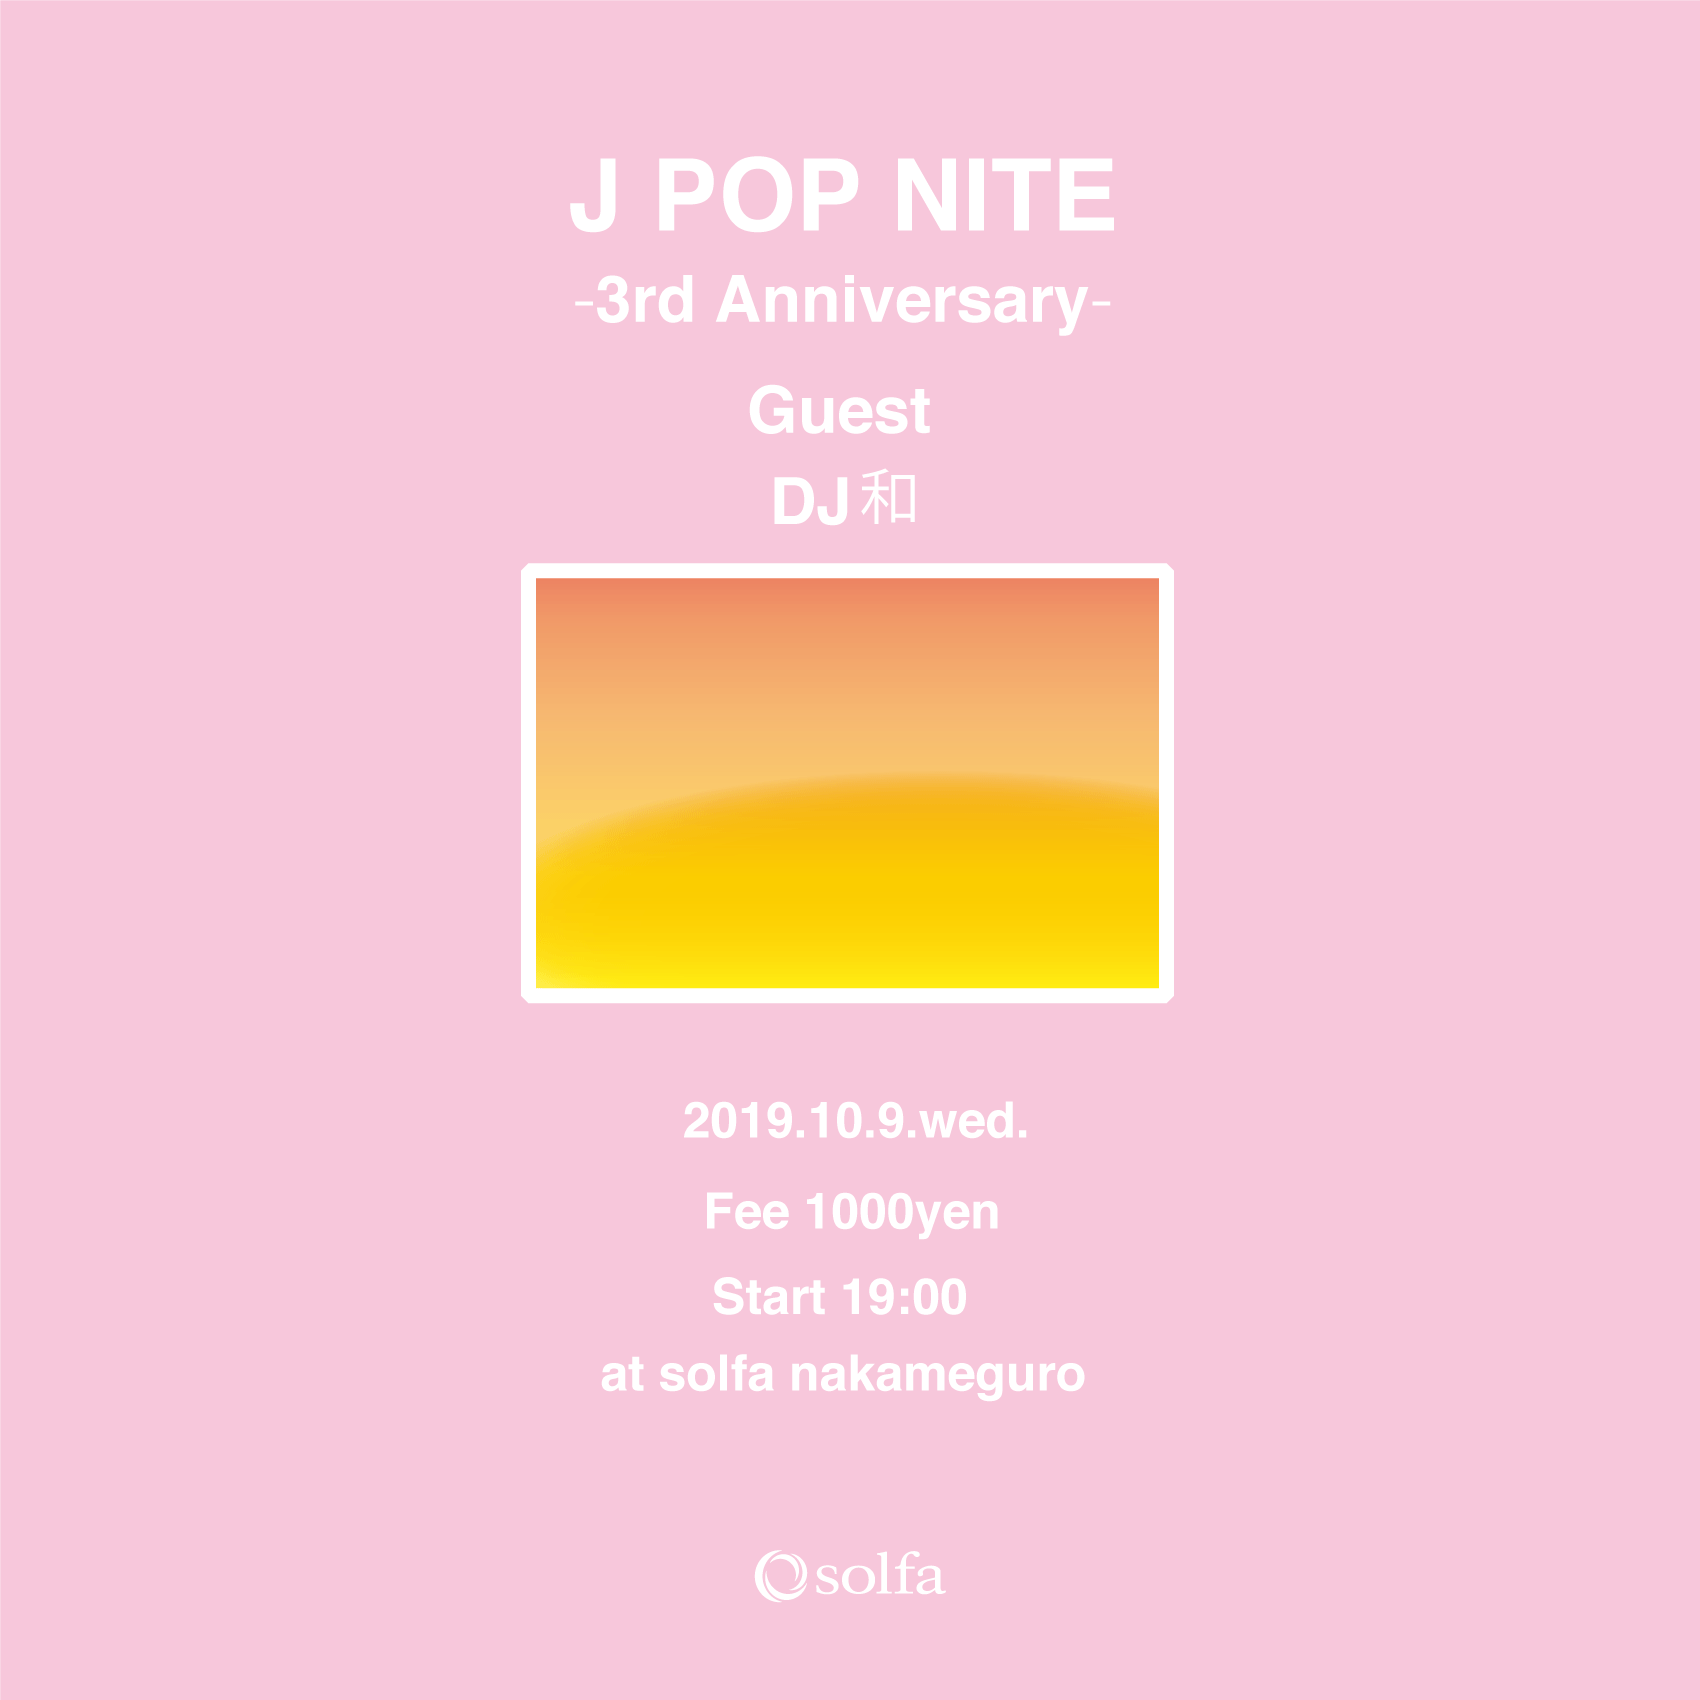 JPOP NITE -3rd Anniversary-